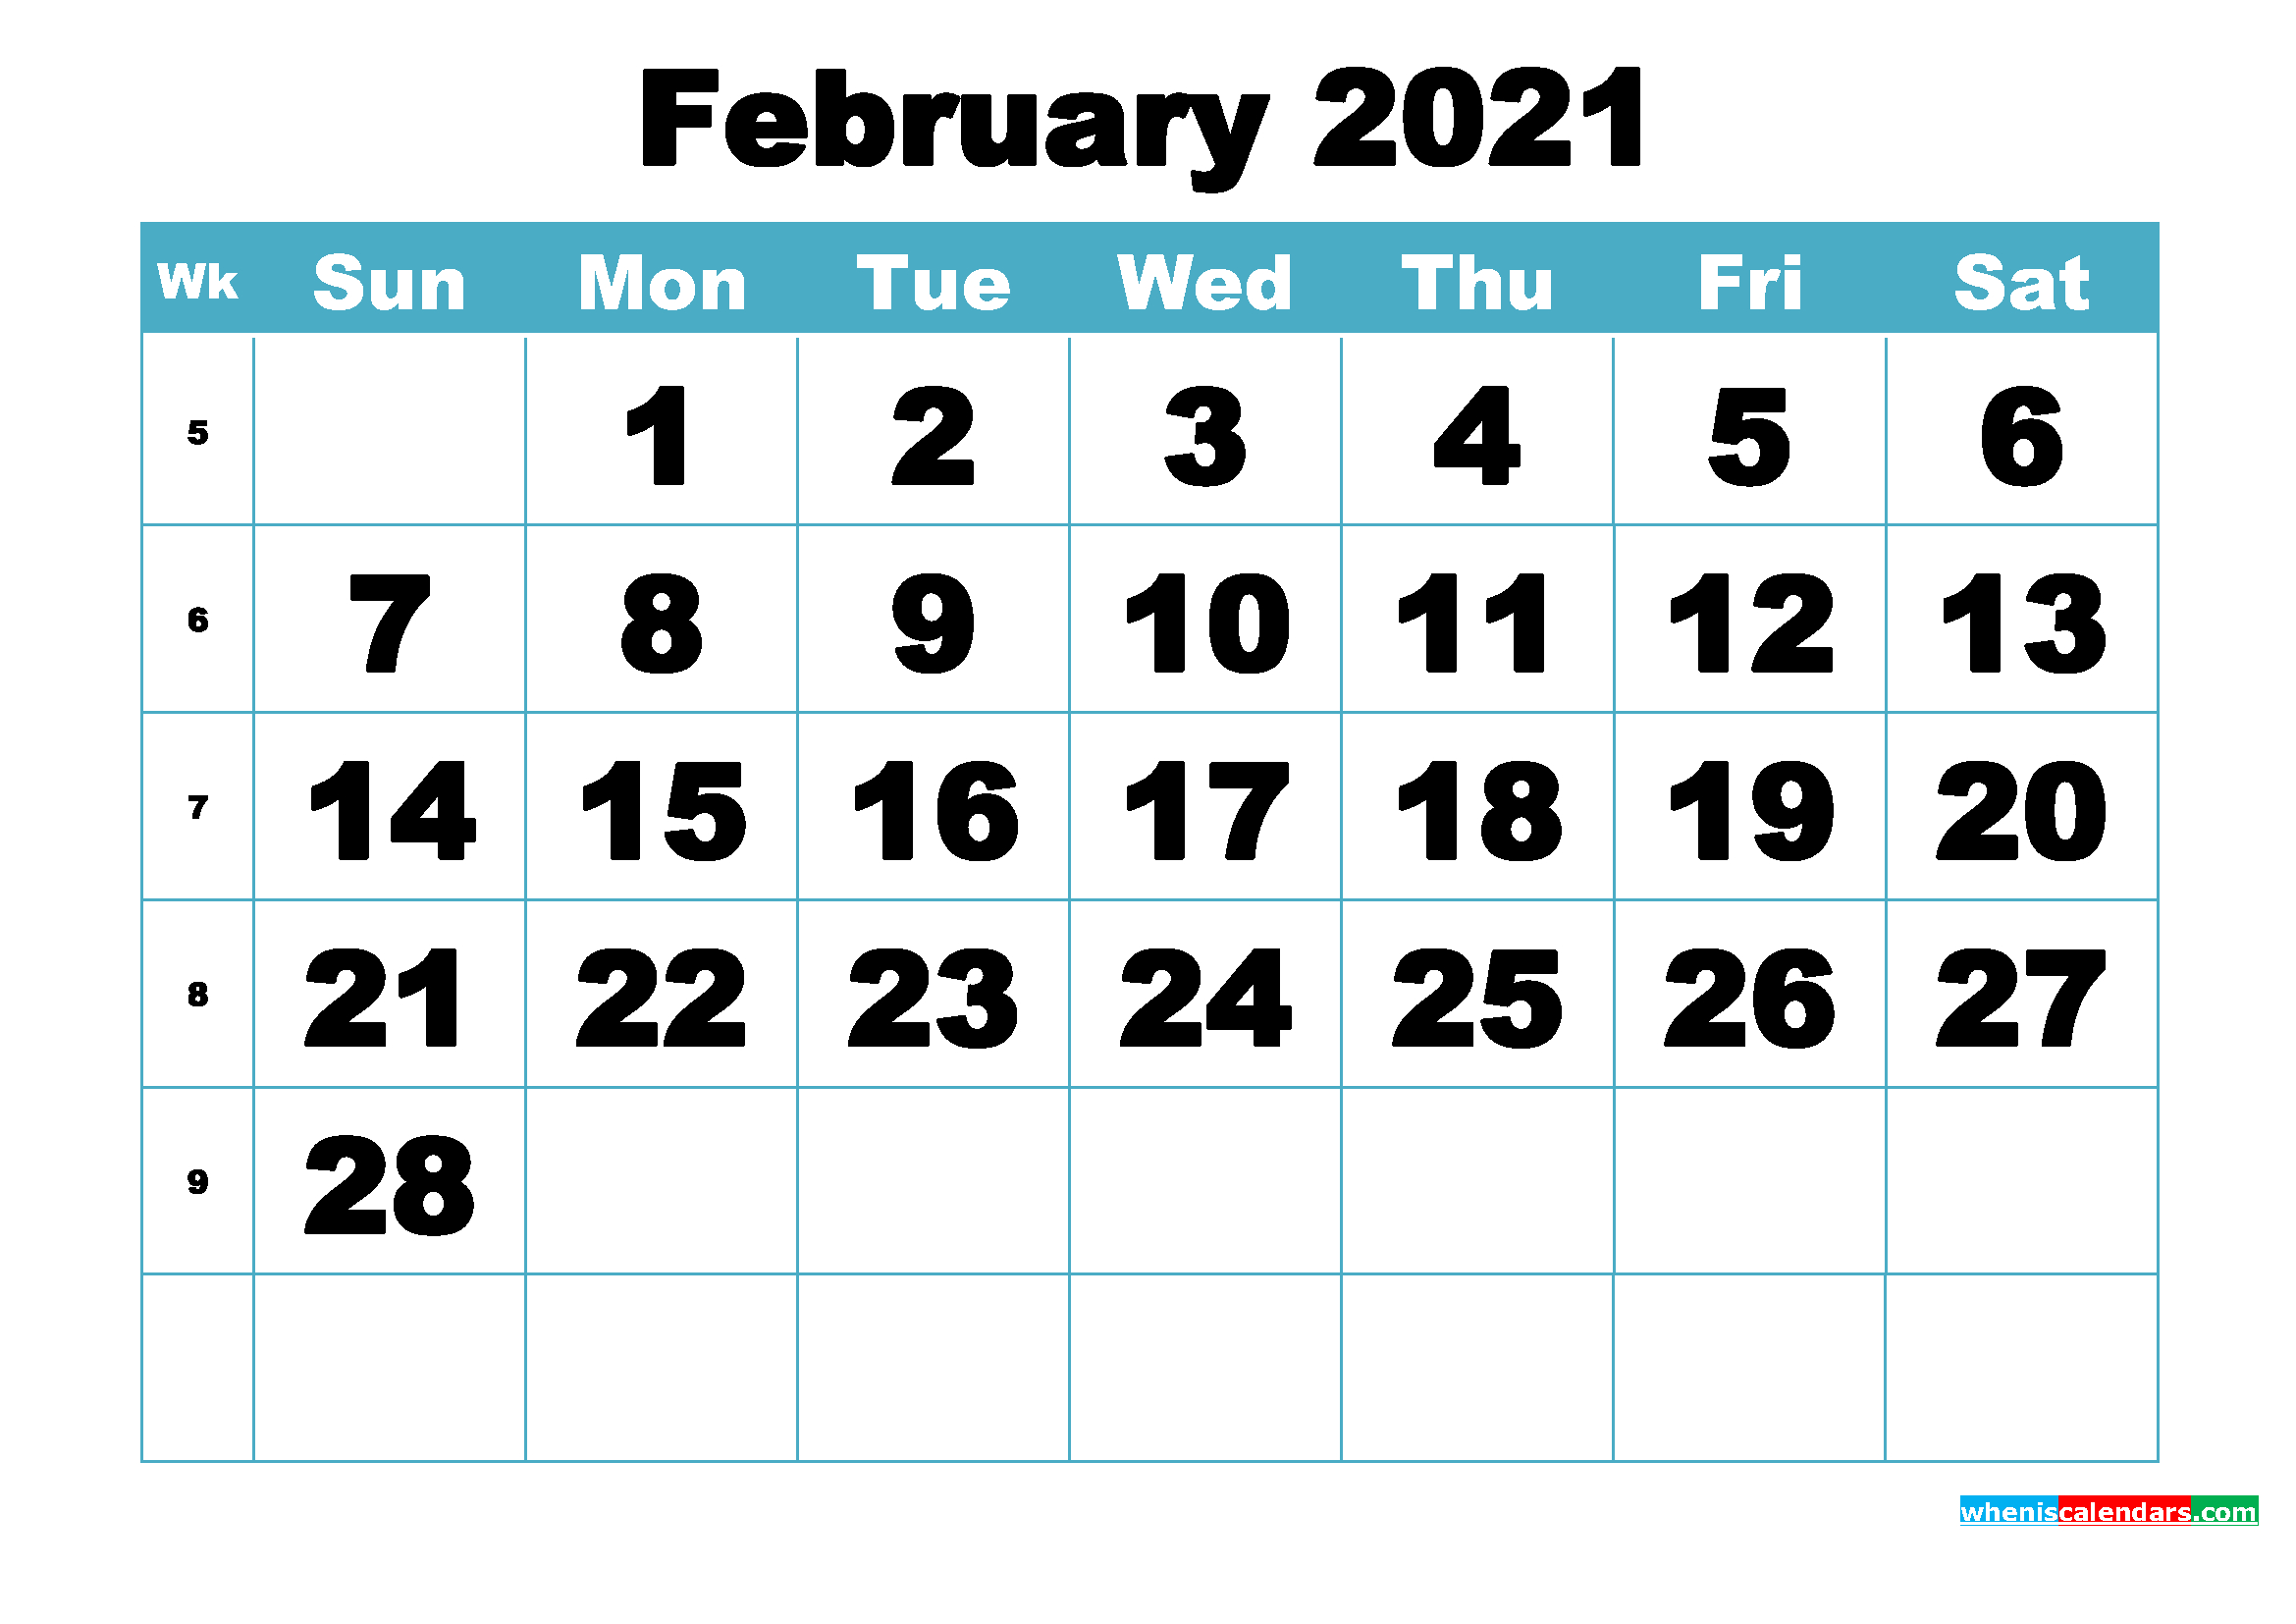 February 2021 Printable Calendars - Riset